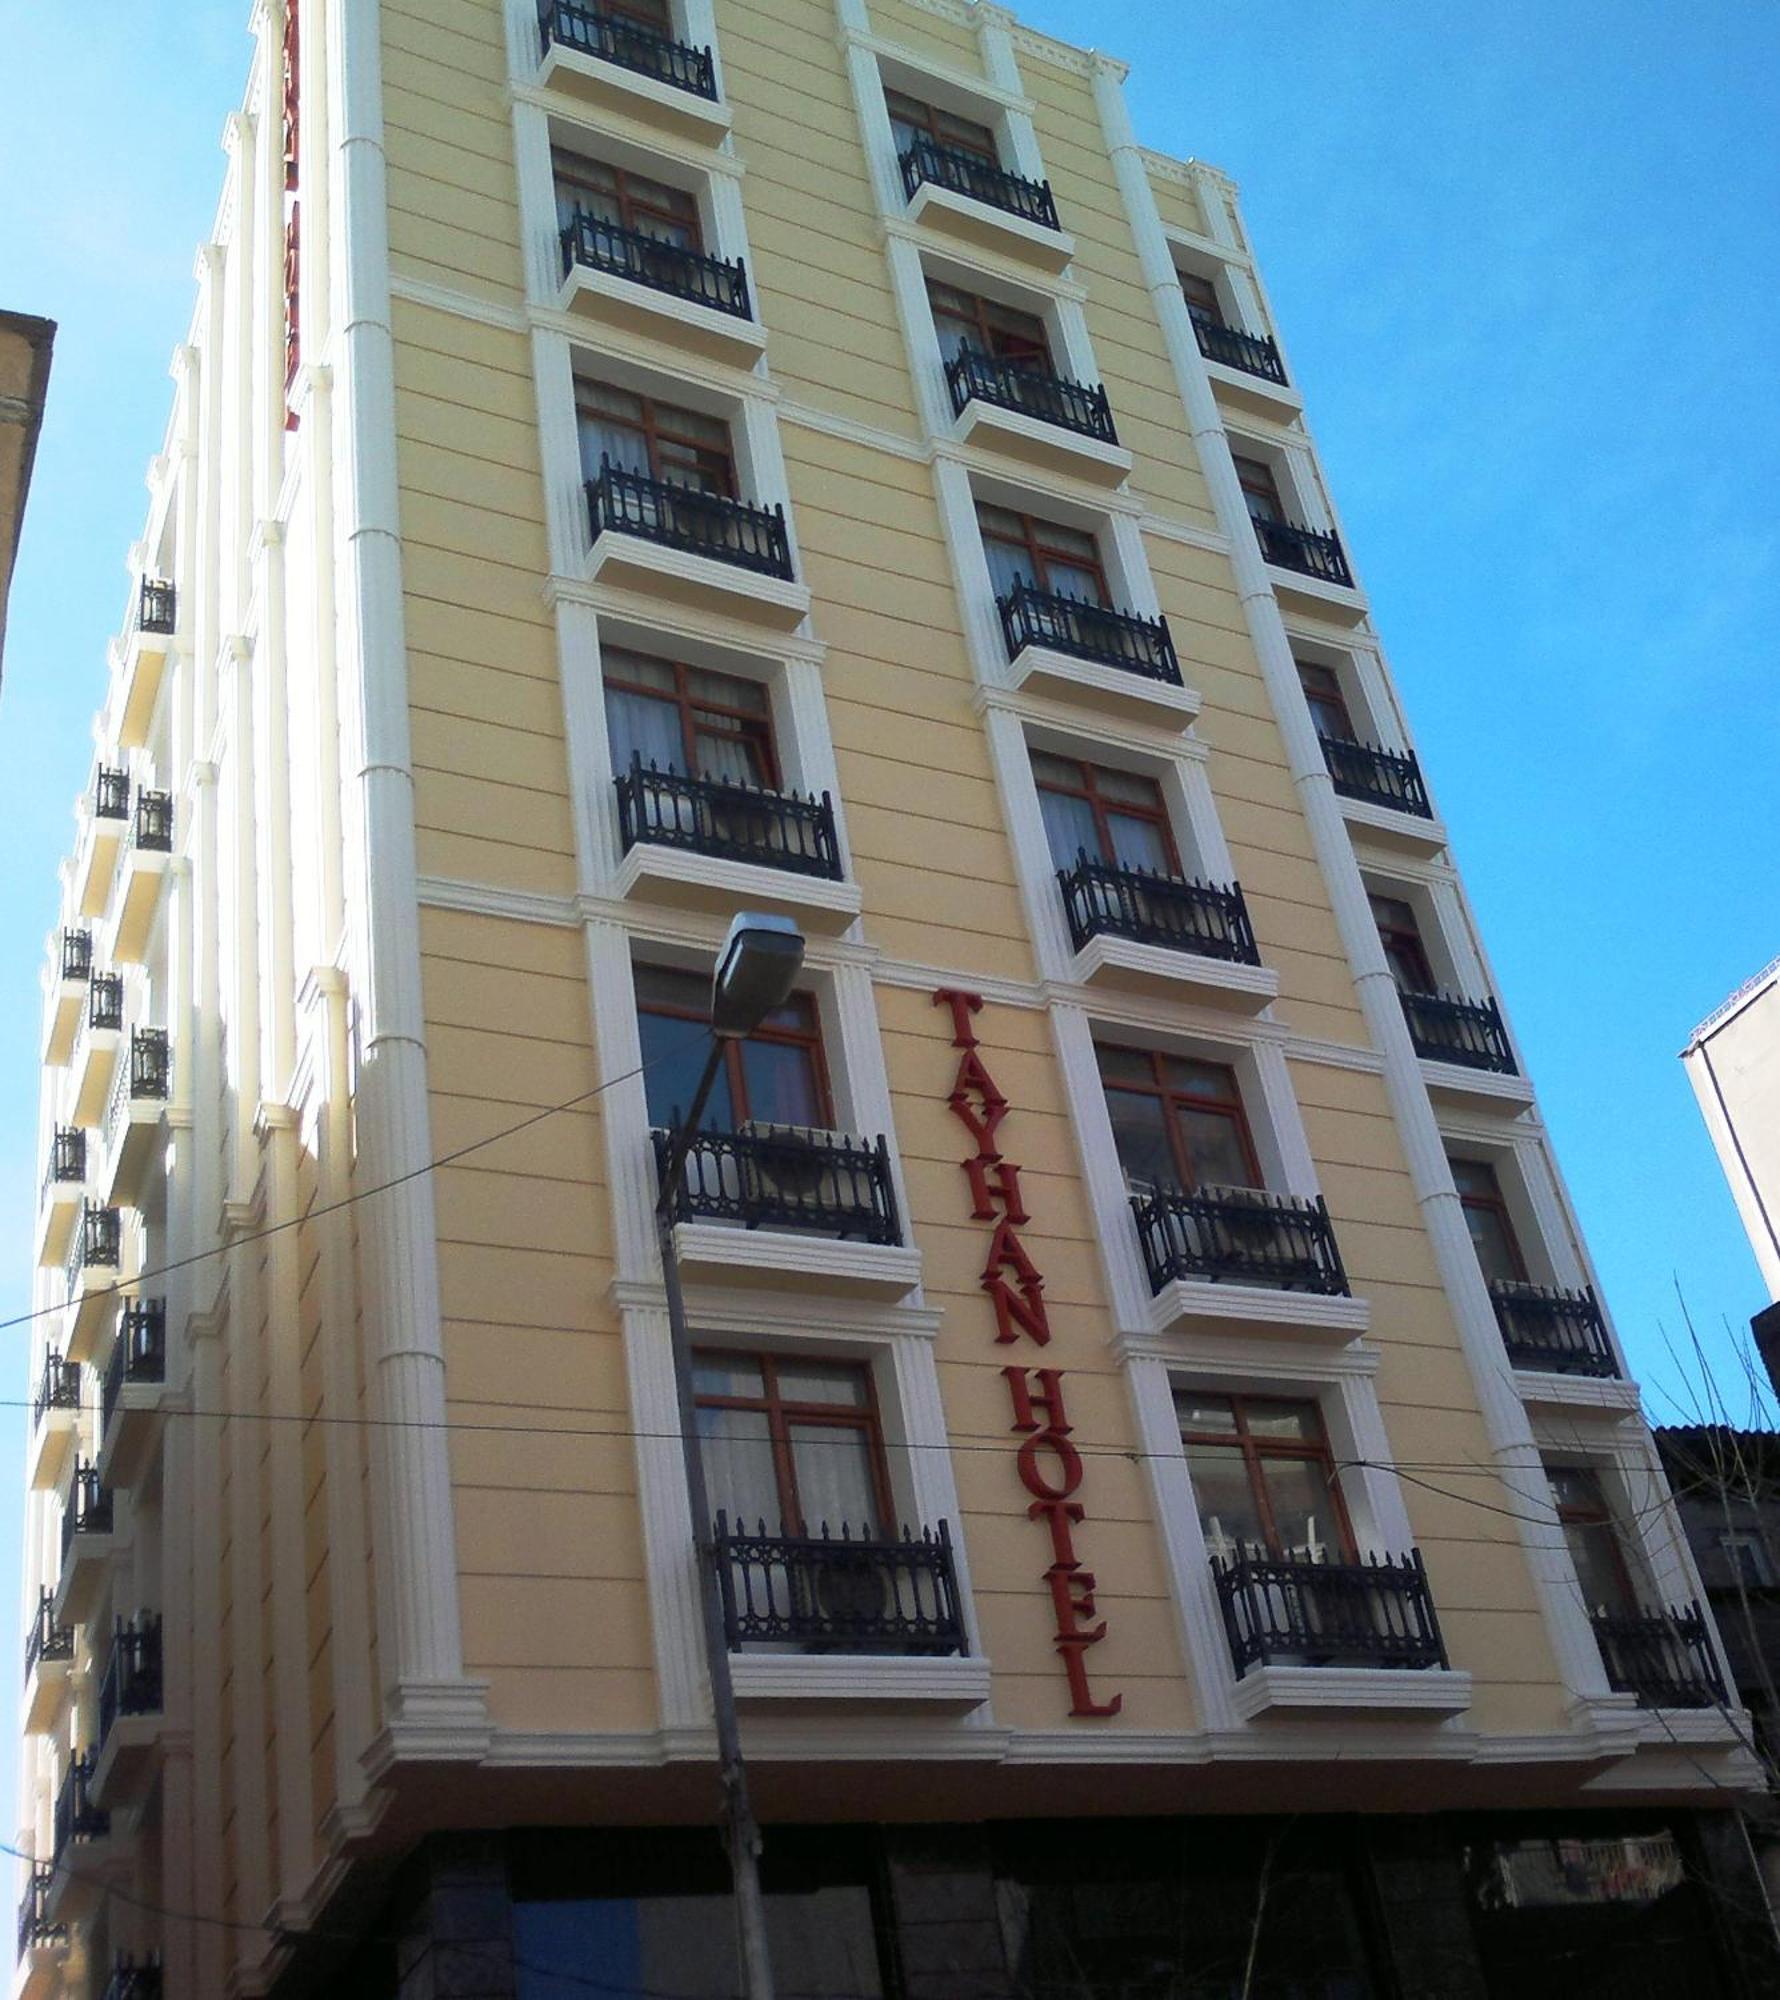 Tayhan Hotel Istanbul Exterior photo